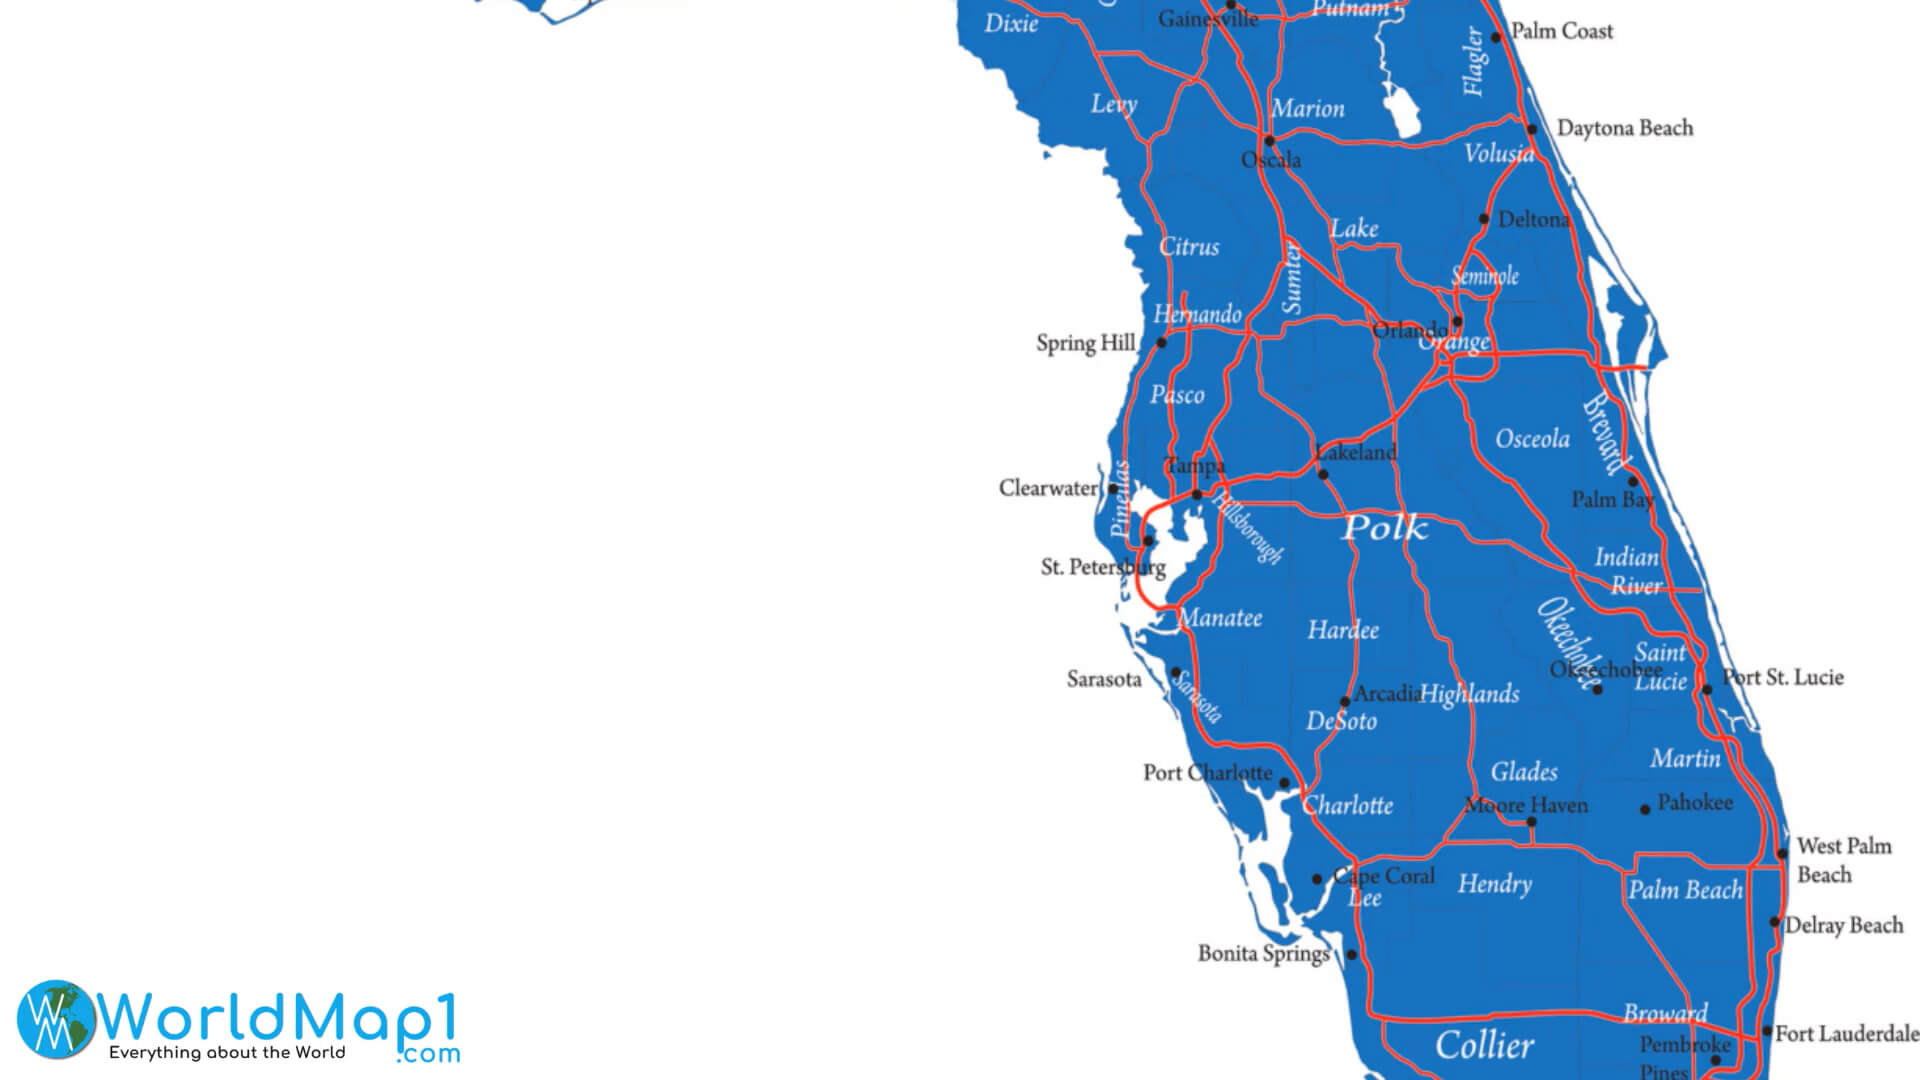 Cities Map of Florida